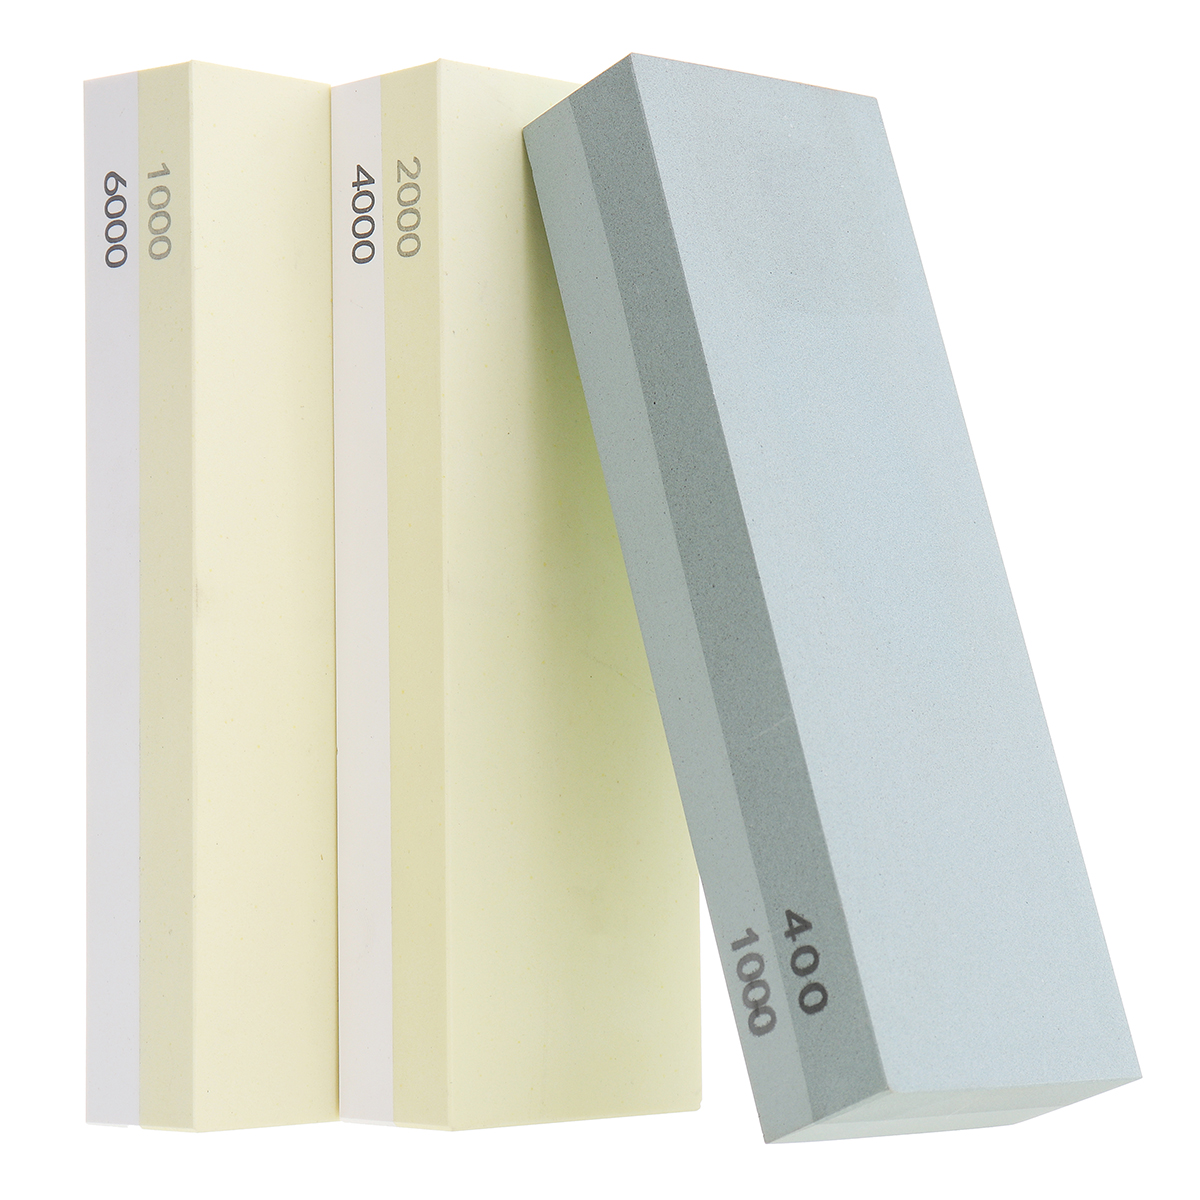 Dual-Sided-Premium-Cutter-Sharpen-Stone-2-Side-Grit-Waterstone-Best-Whetstone-Sharpener-1352675-9